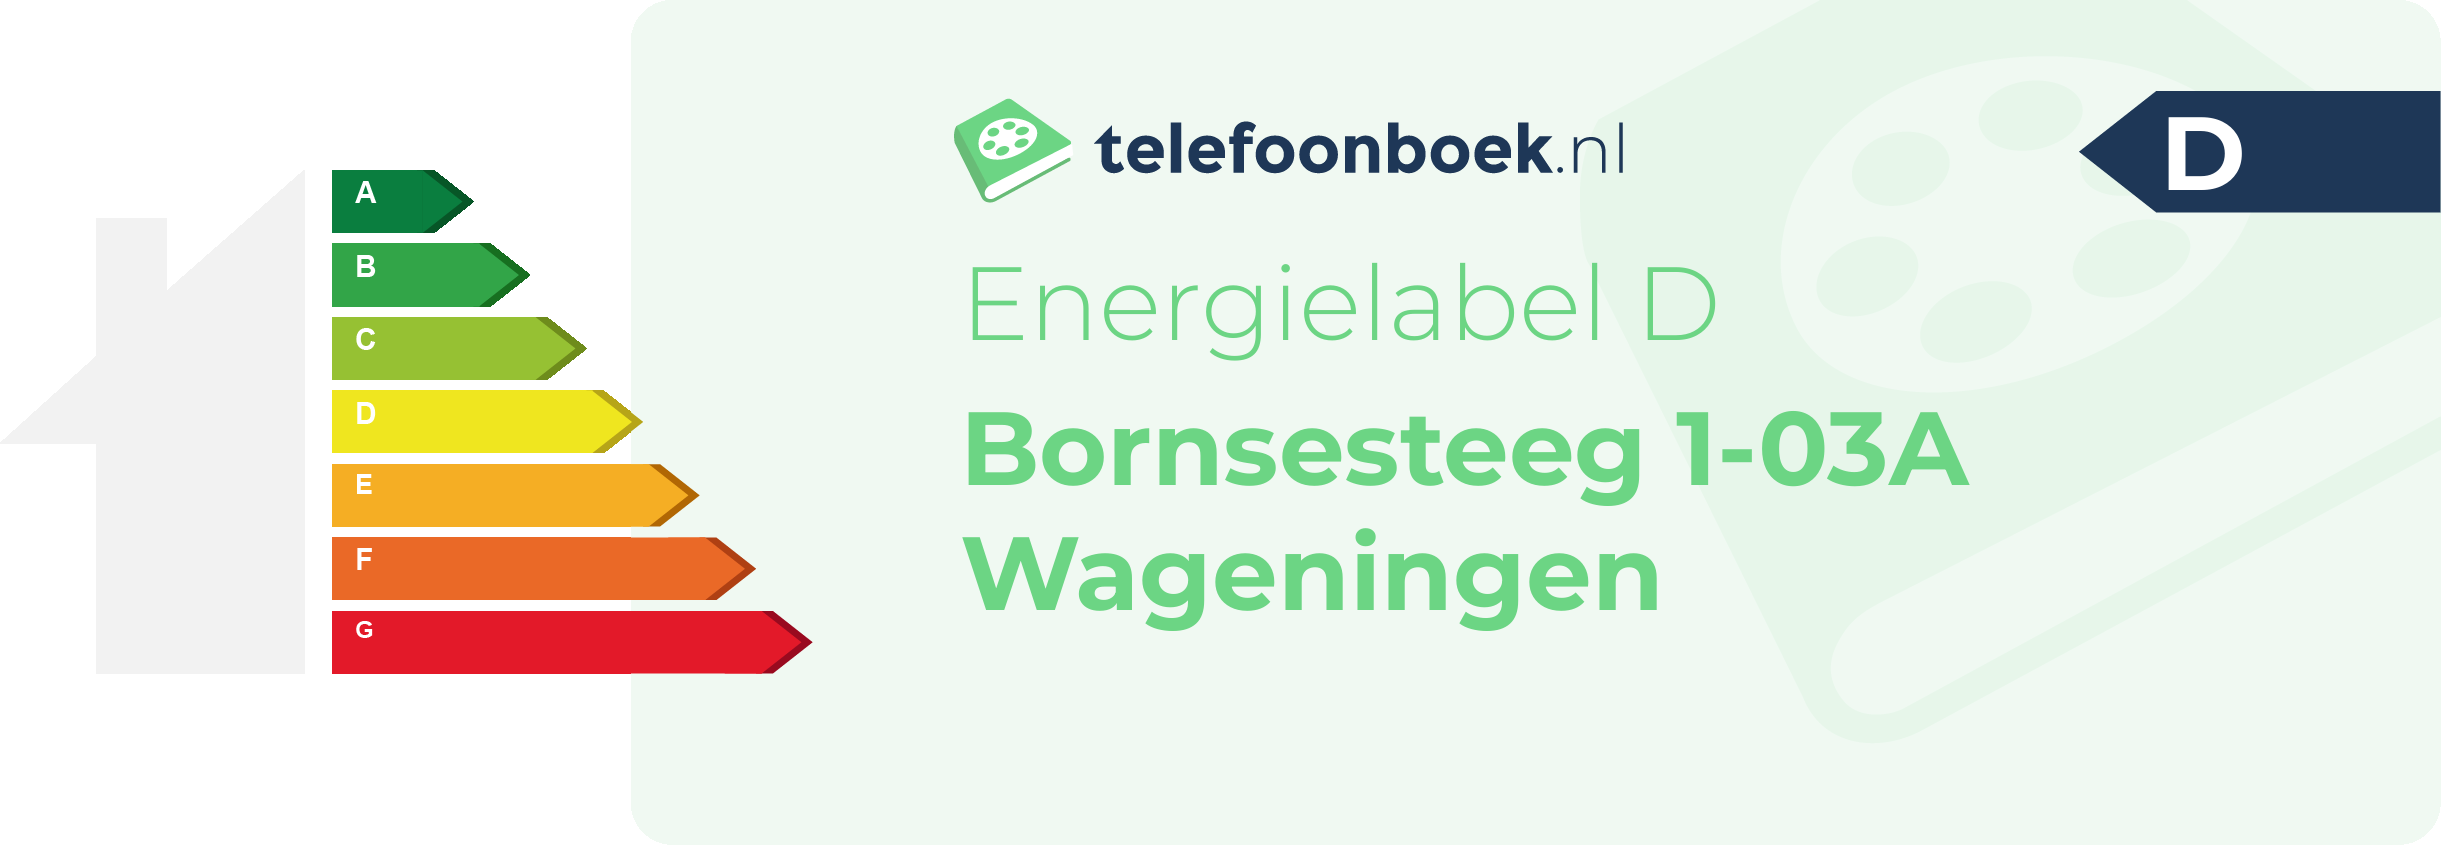 Energielabel Bornsesteeg 1-03A Wageningen